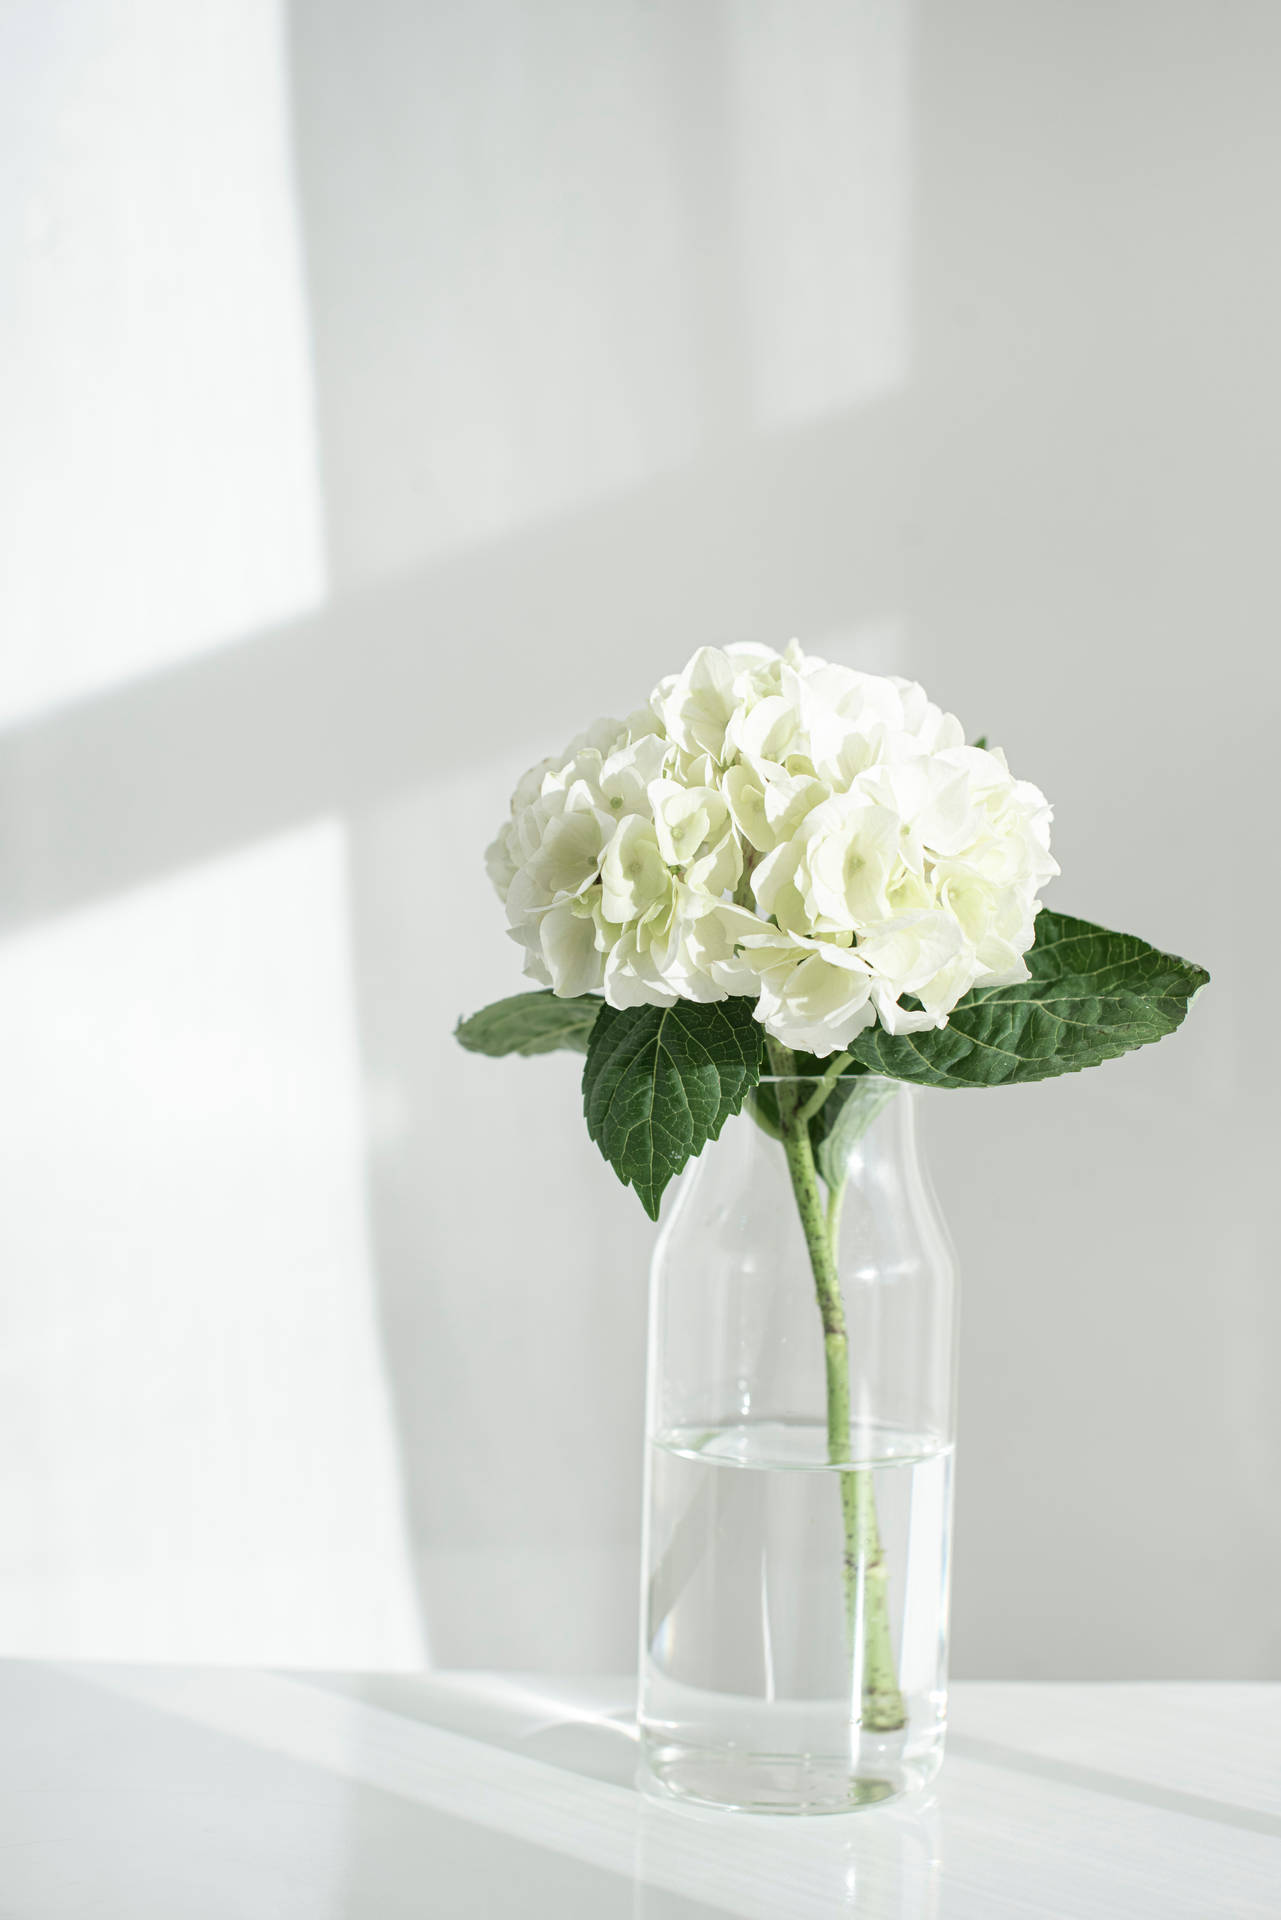 White Floral Pattern Images - Free Download on Freepik